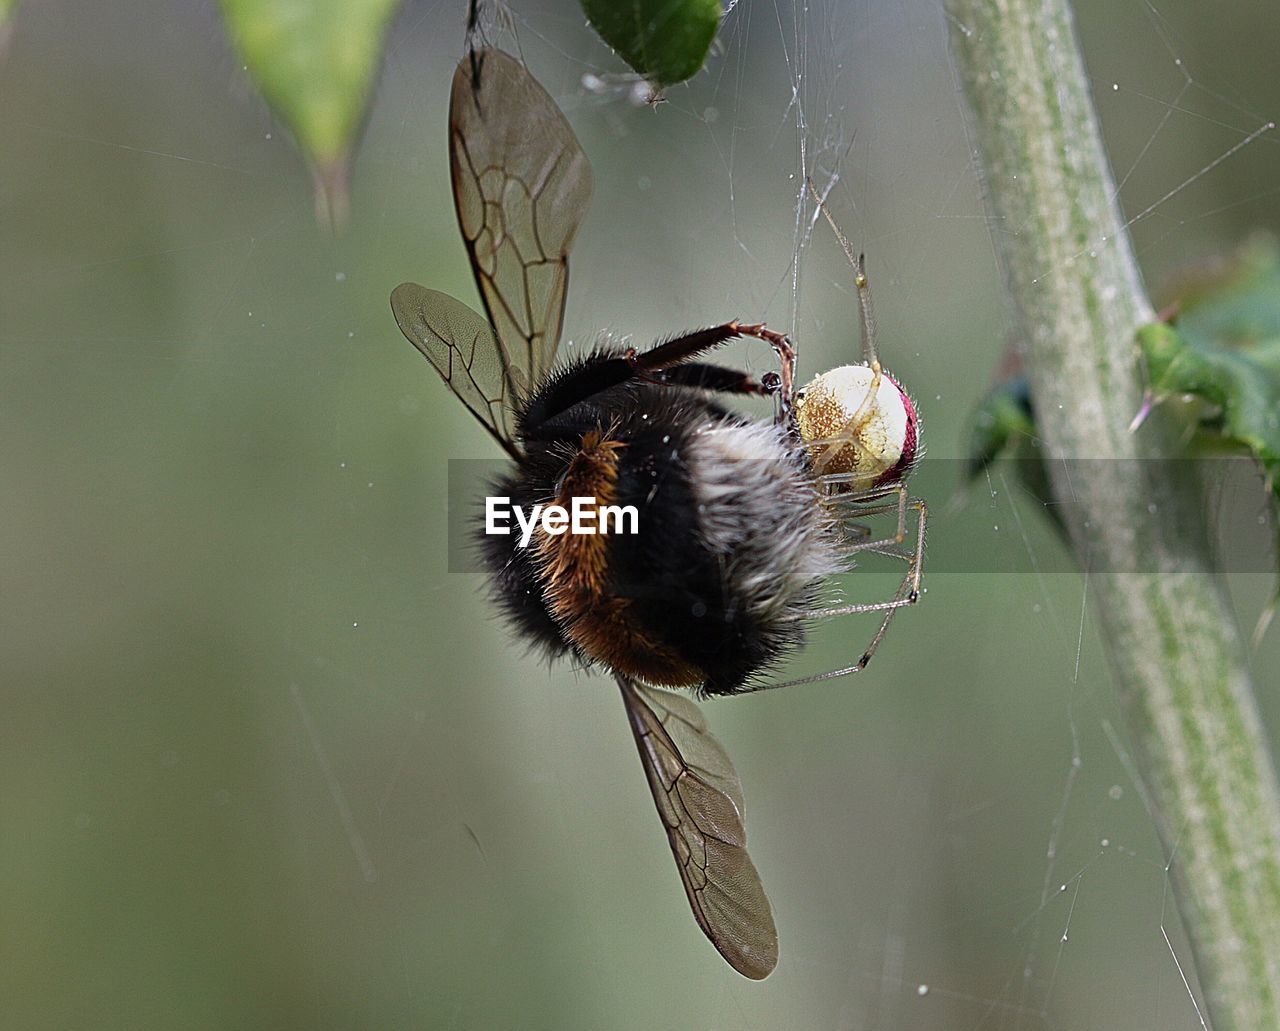 Macro shot of spider and bumblebee fighting on web